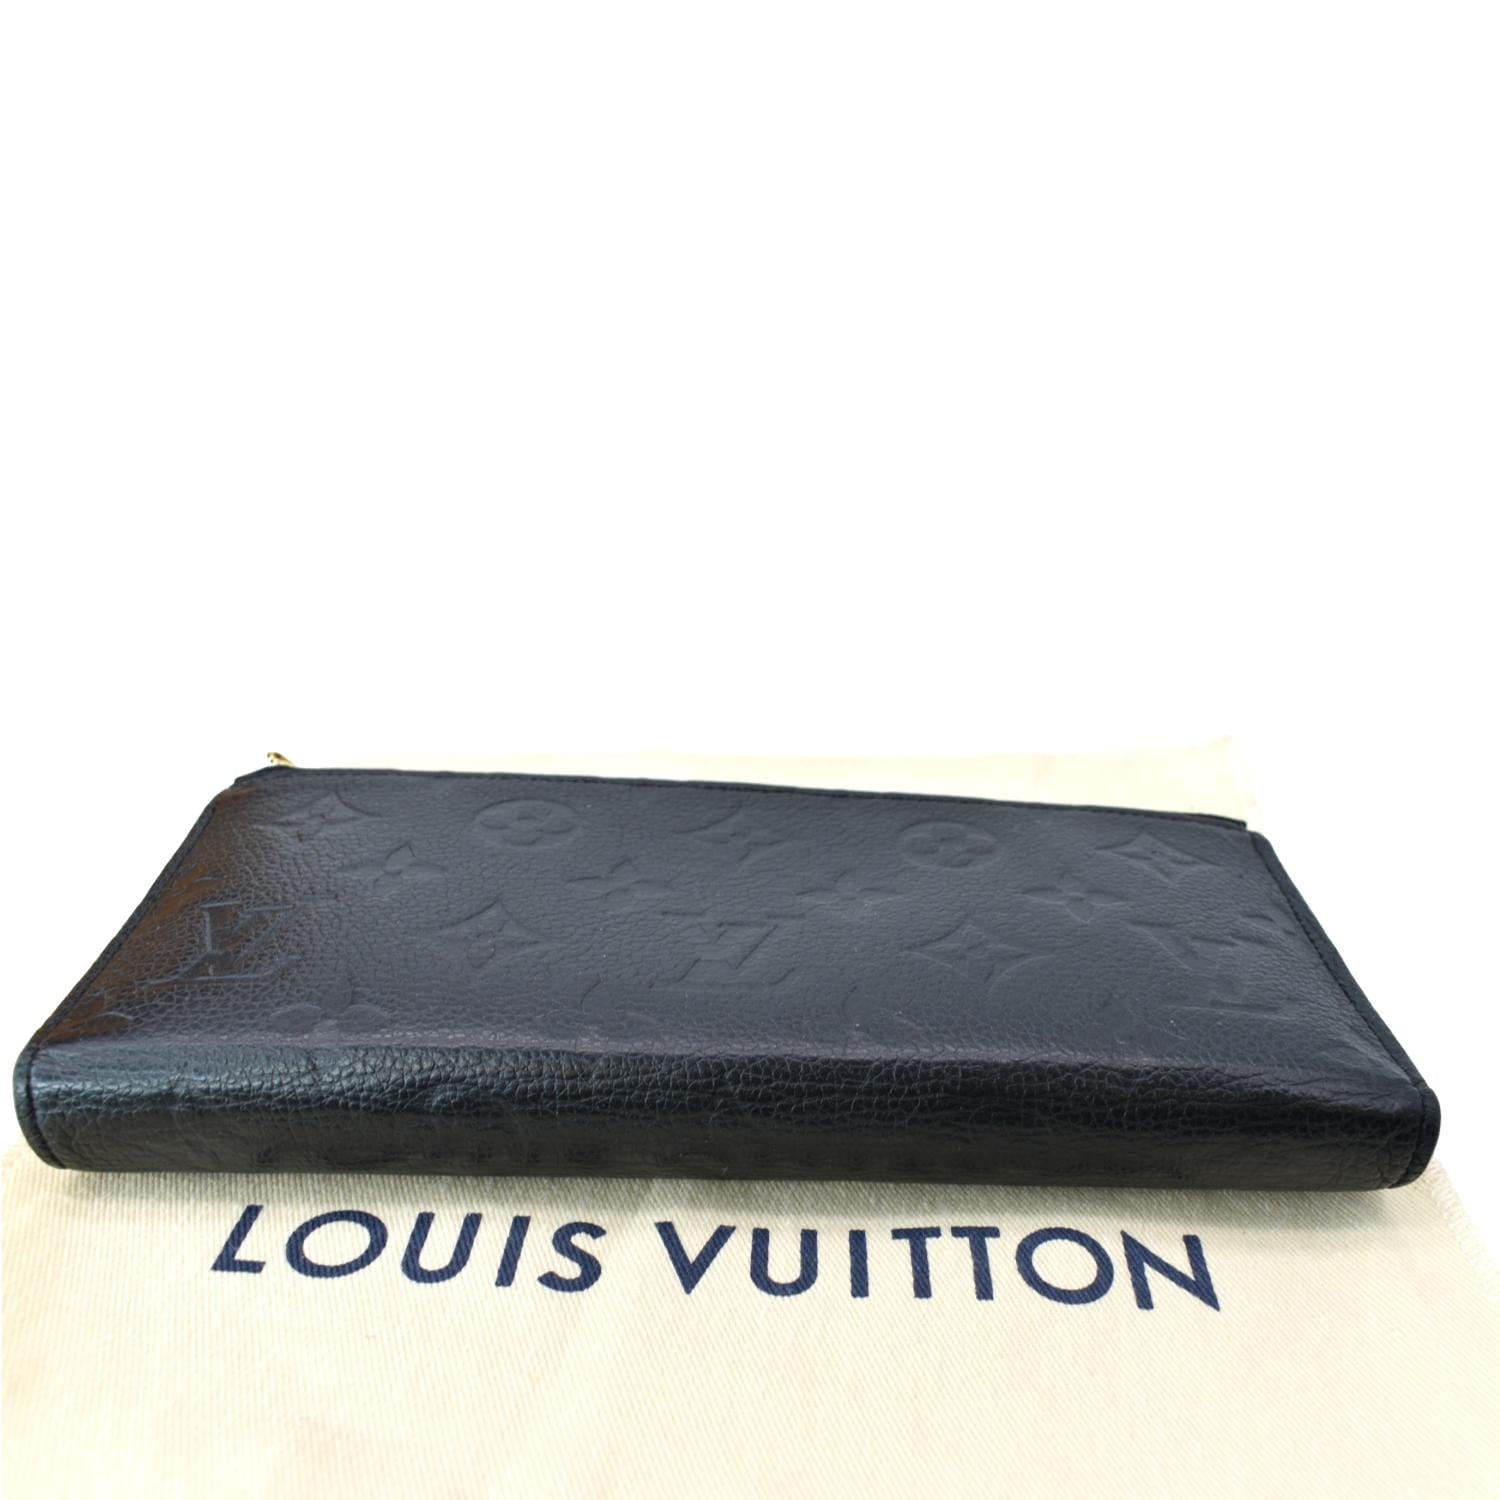 Double Card Holder - Luxury Monogram Shadow Black